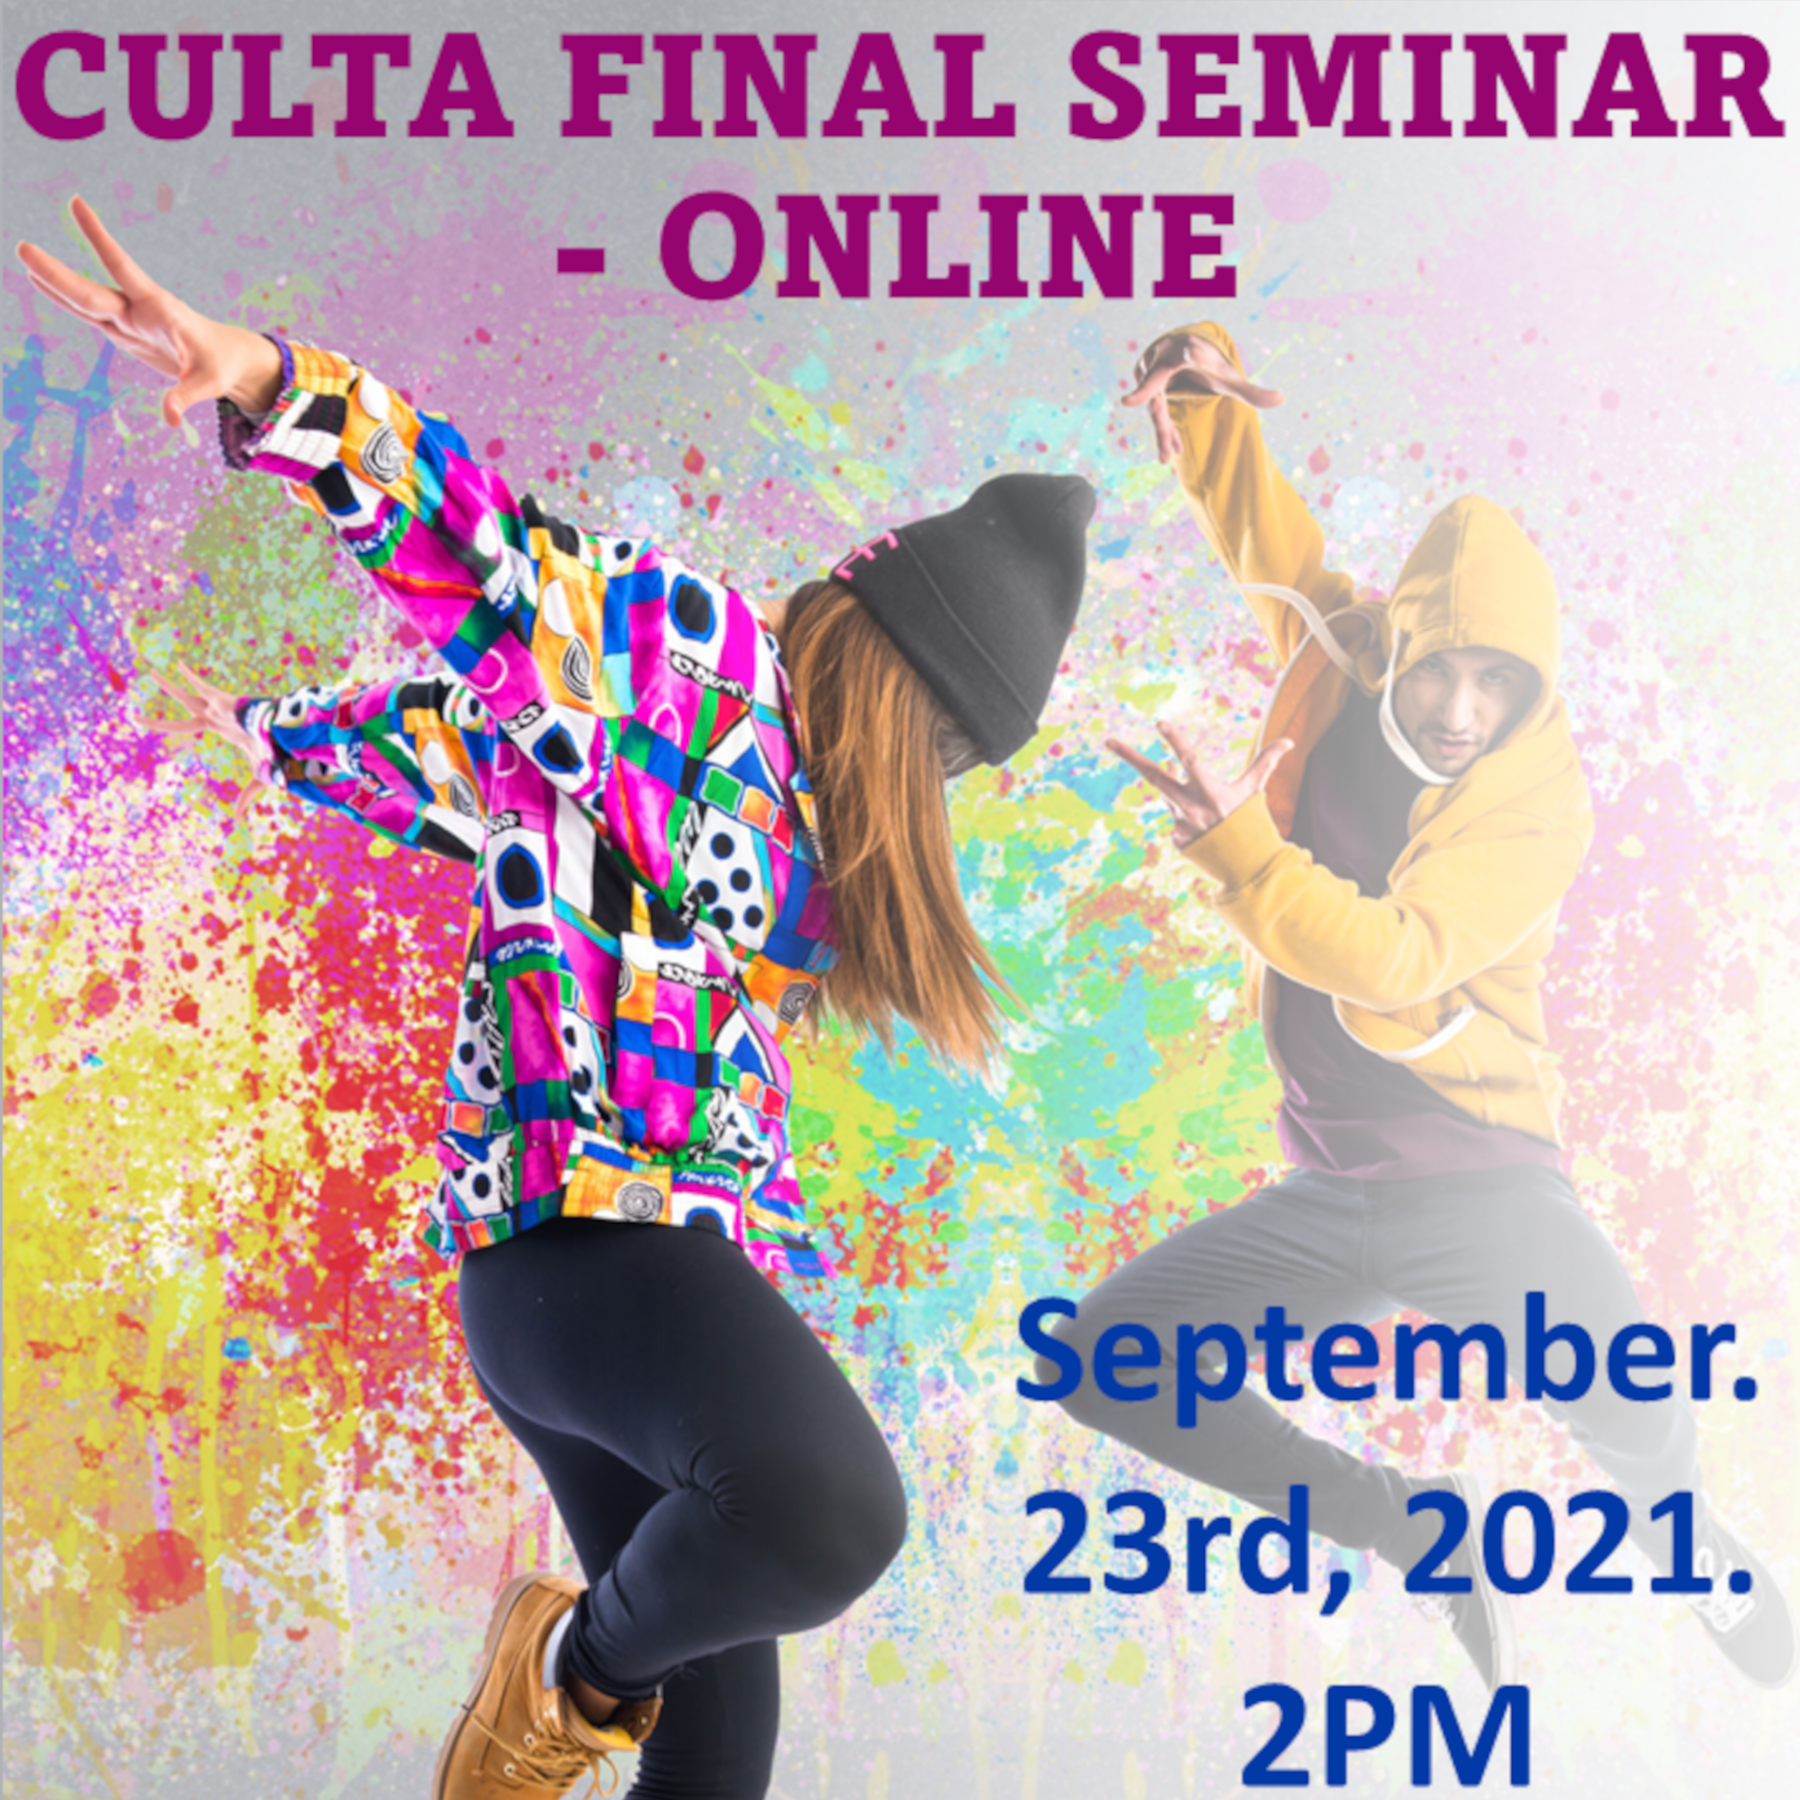 CULTA final seminar - online